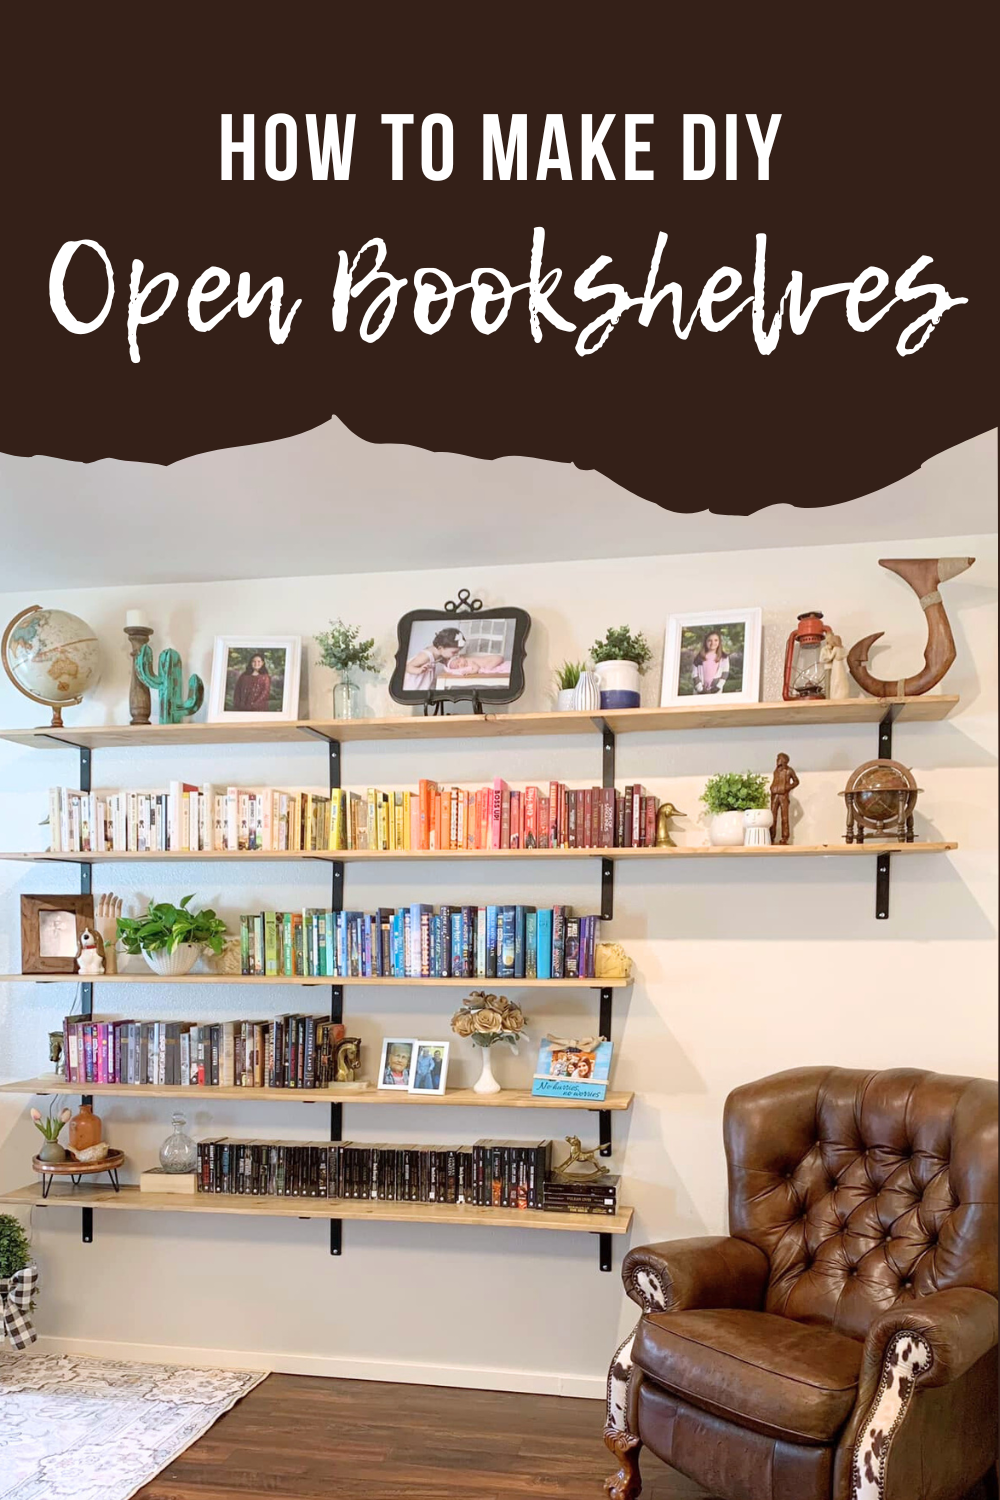 How to Make DIY Open Bookshelves | Finding Mandee